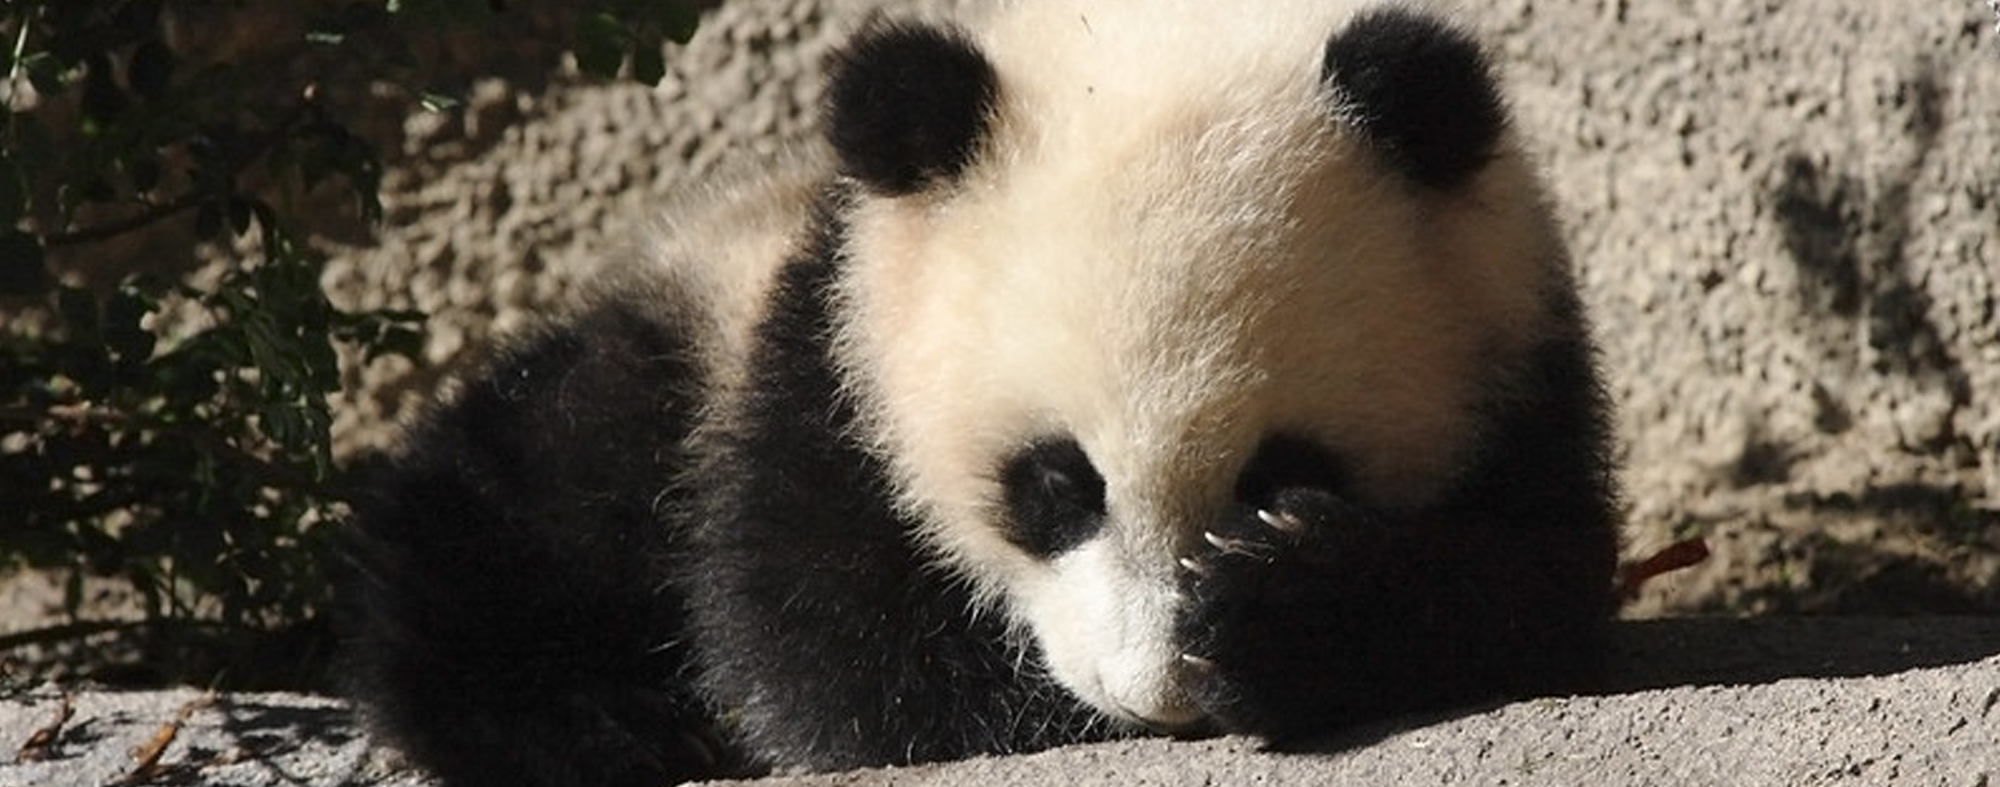 a baby panda